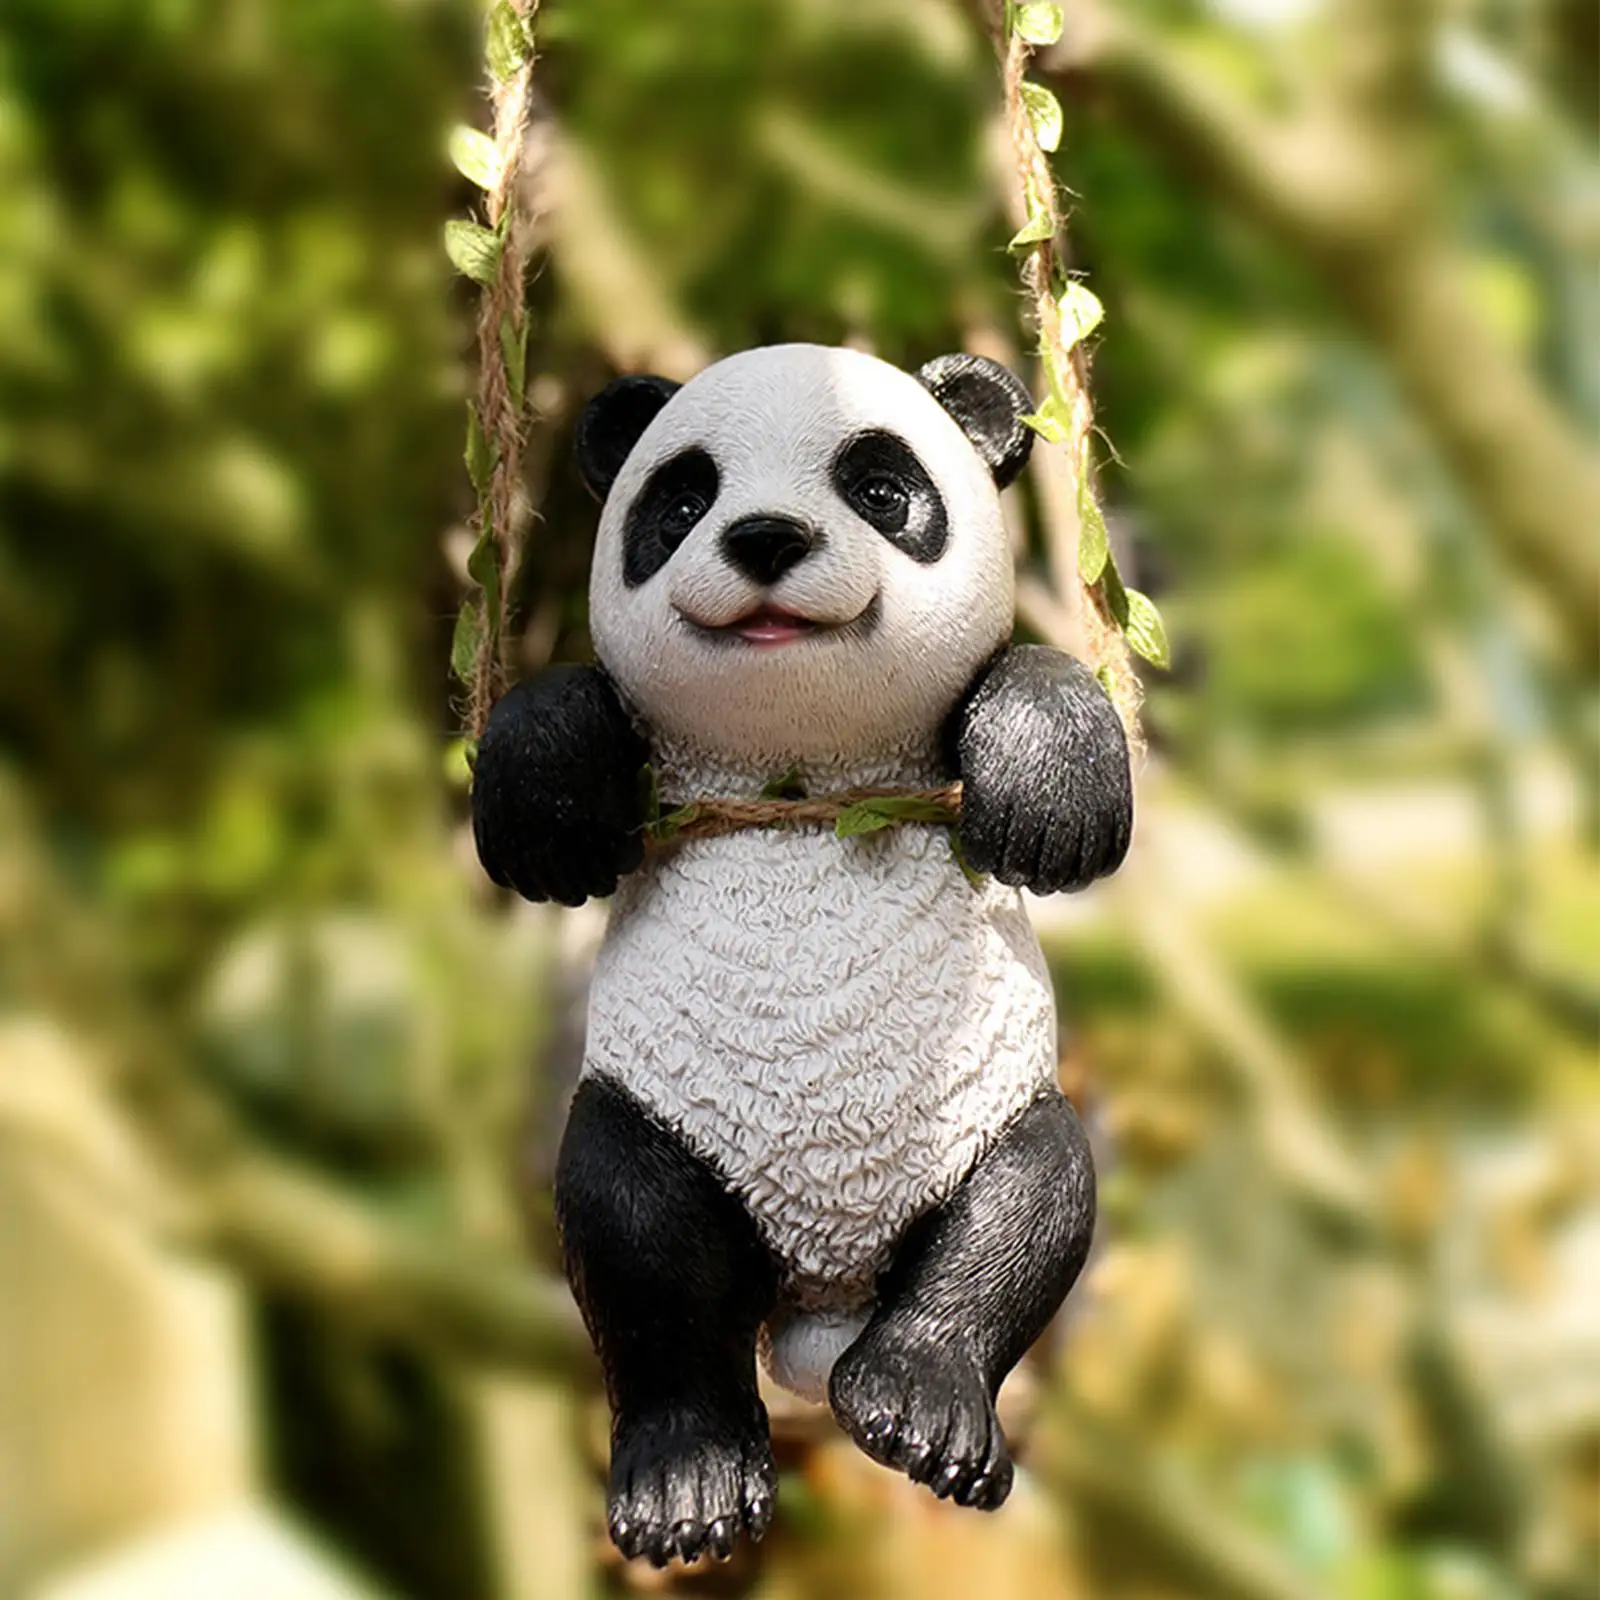 Panda Sculpture Ornaments Simulated Garden Pendant Adorable panda Outdoor Statue for Backyard Patio Indoor Desktop Home